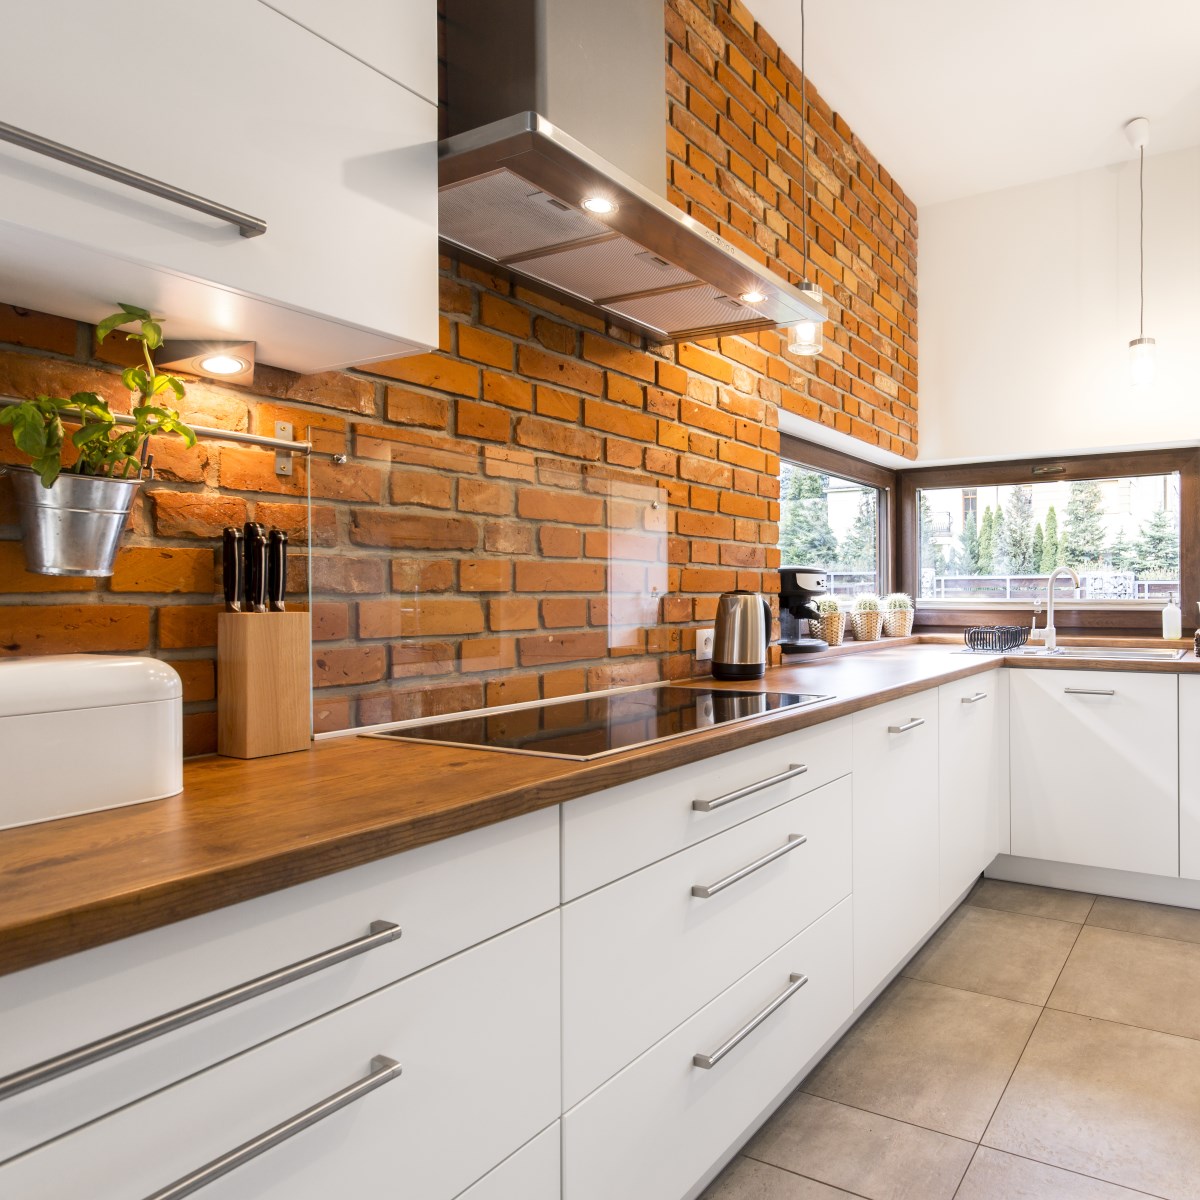 Design with other materials 4 - kitchen with brick glass backsplash